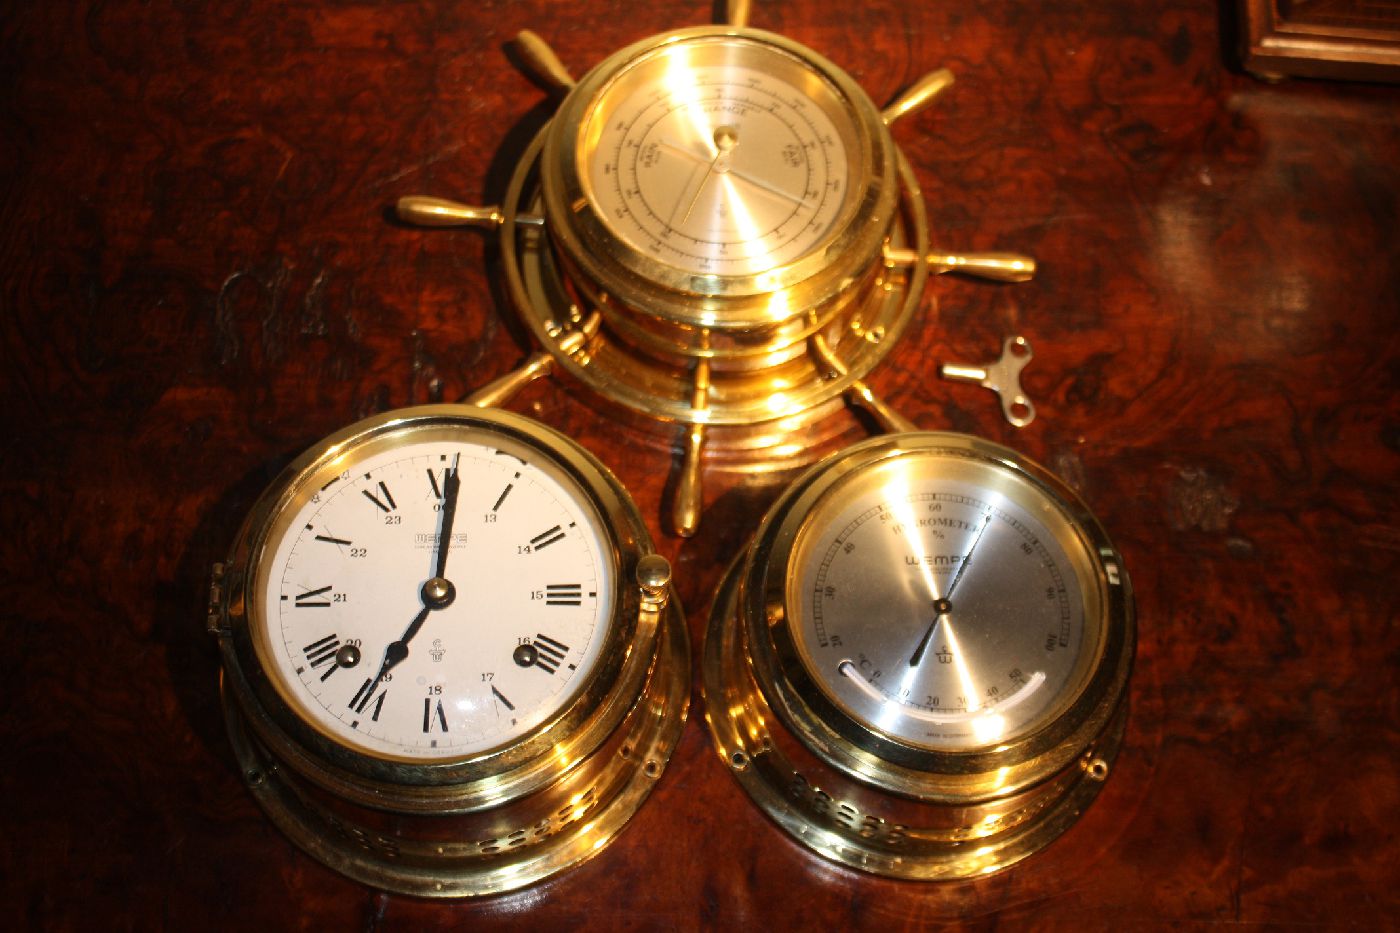 Wempe Schiffschronometer, Barometer Hygrometer